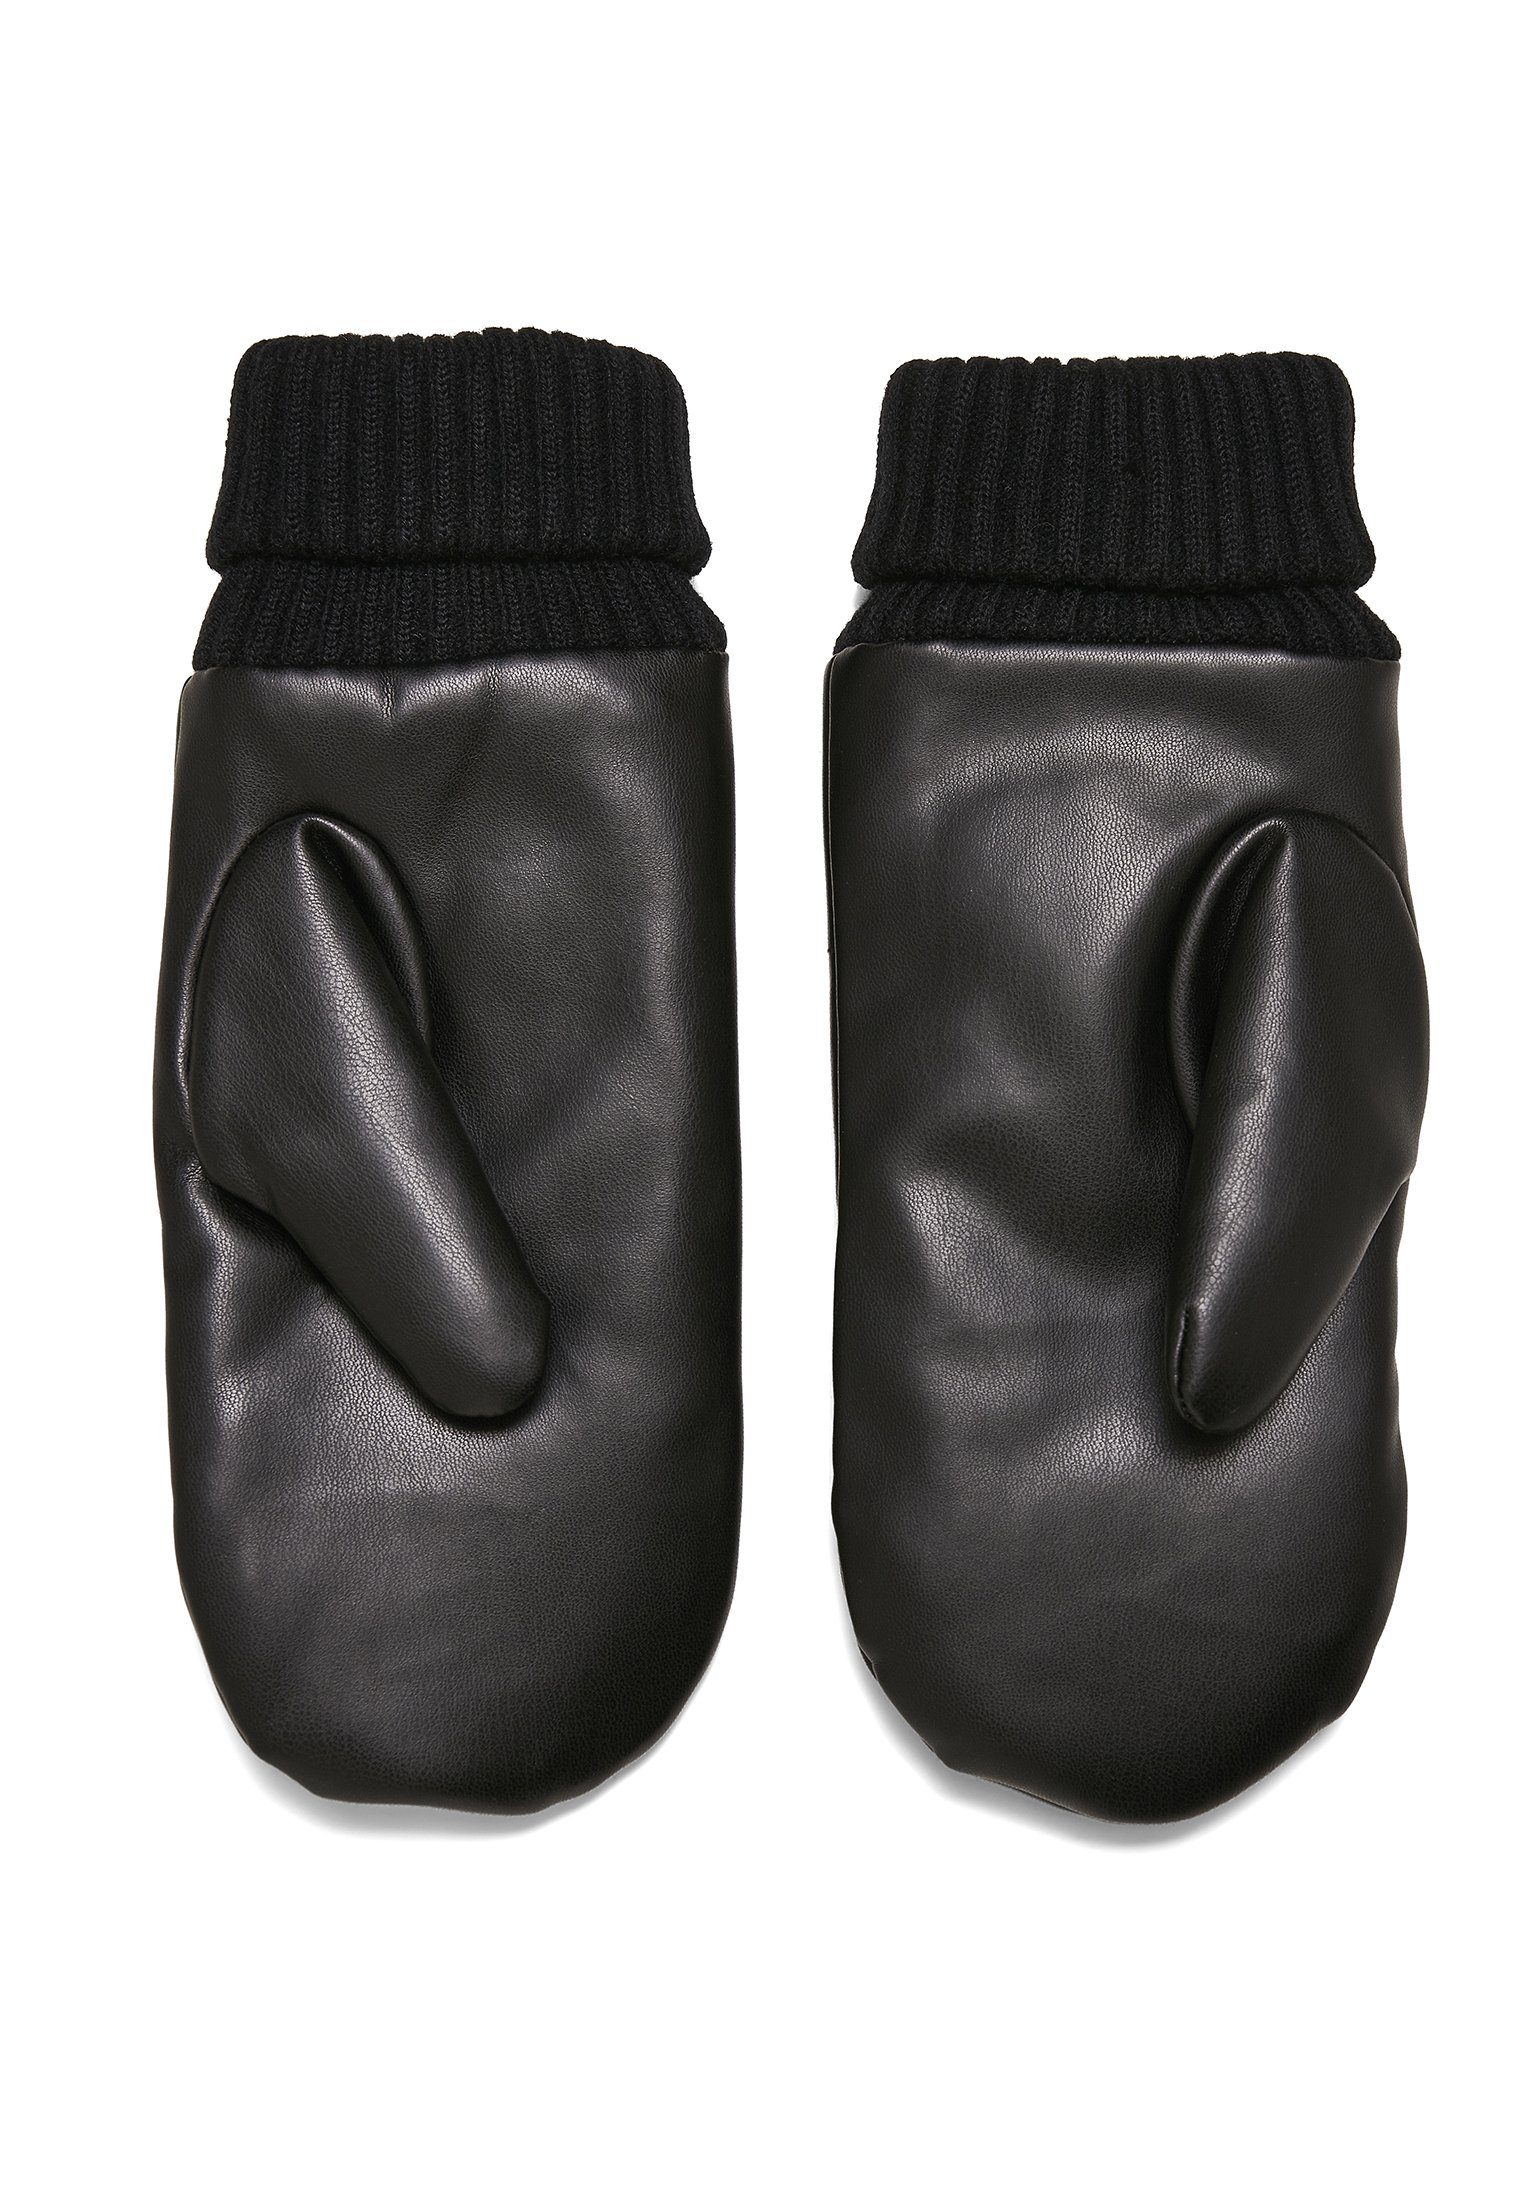 Imitation URBAN Leather Unisex Gloves CLASSICS Puffer Baumwollhandschuhe